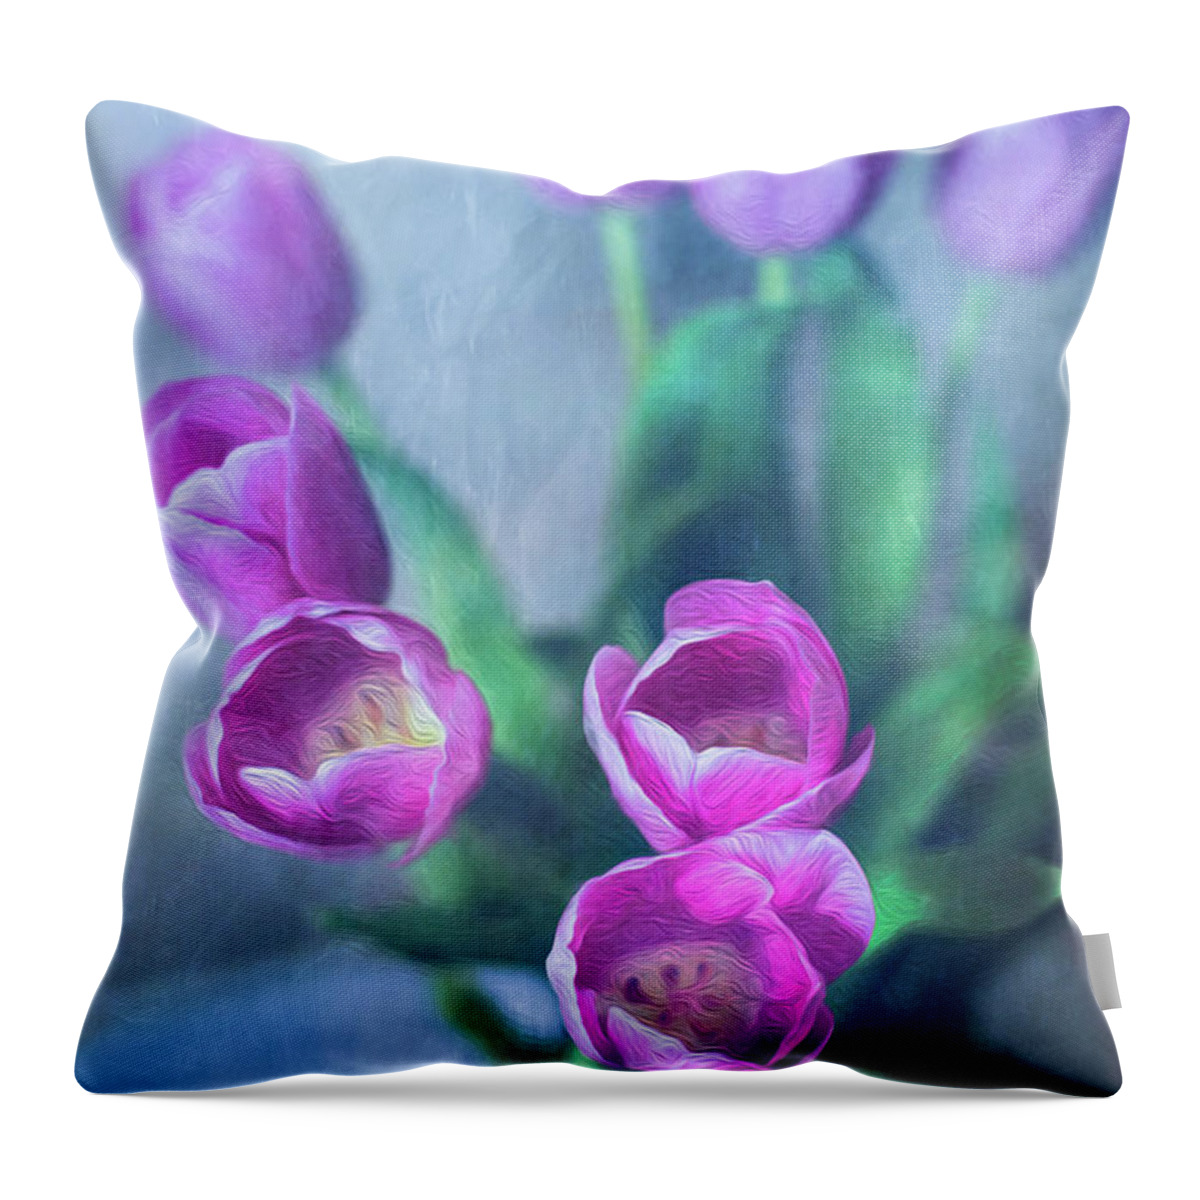 Purple Throw Pillow featuring the photograph Tulips Study #1 by Elvira Pinkhas